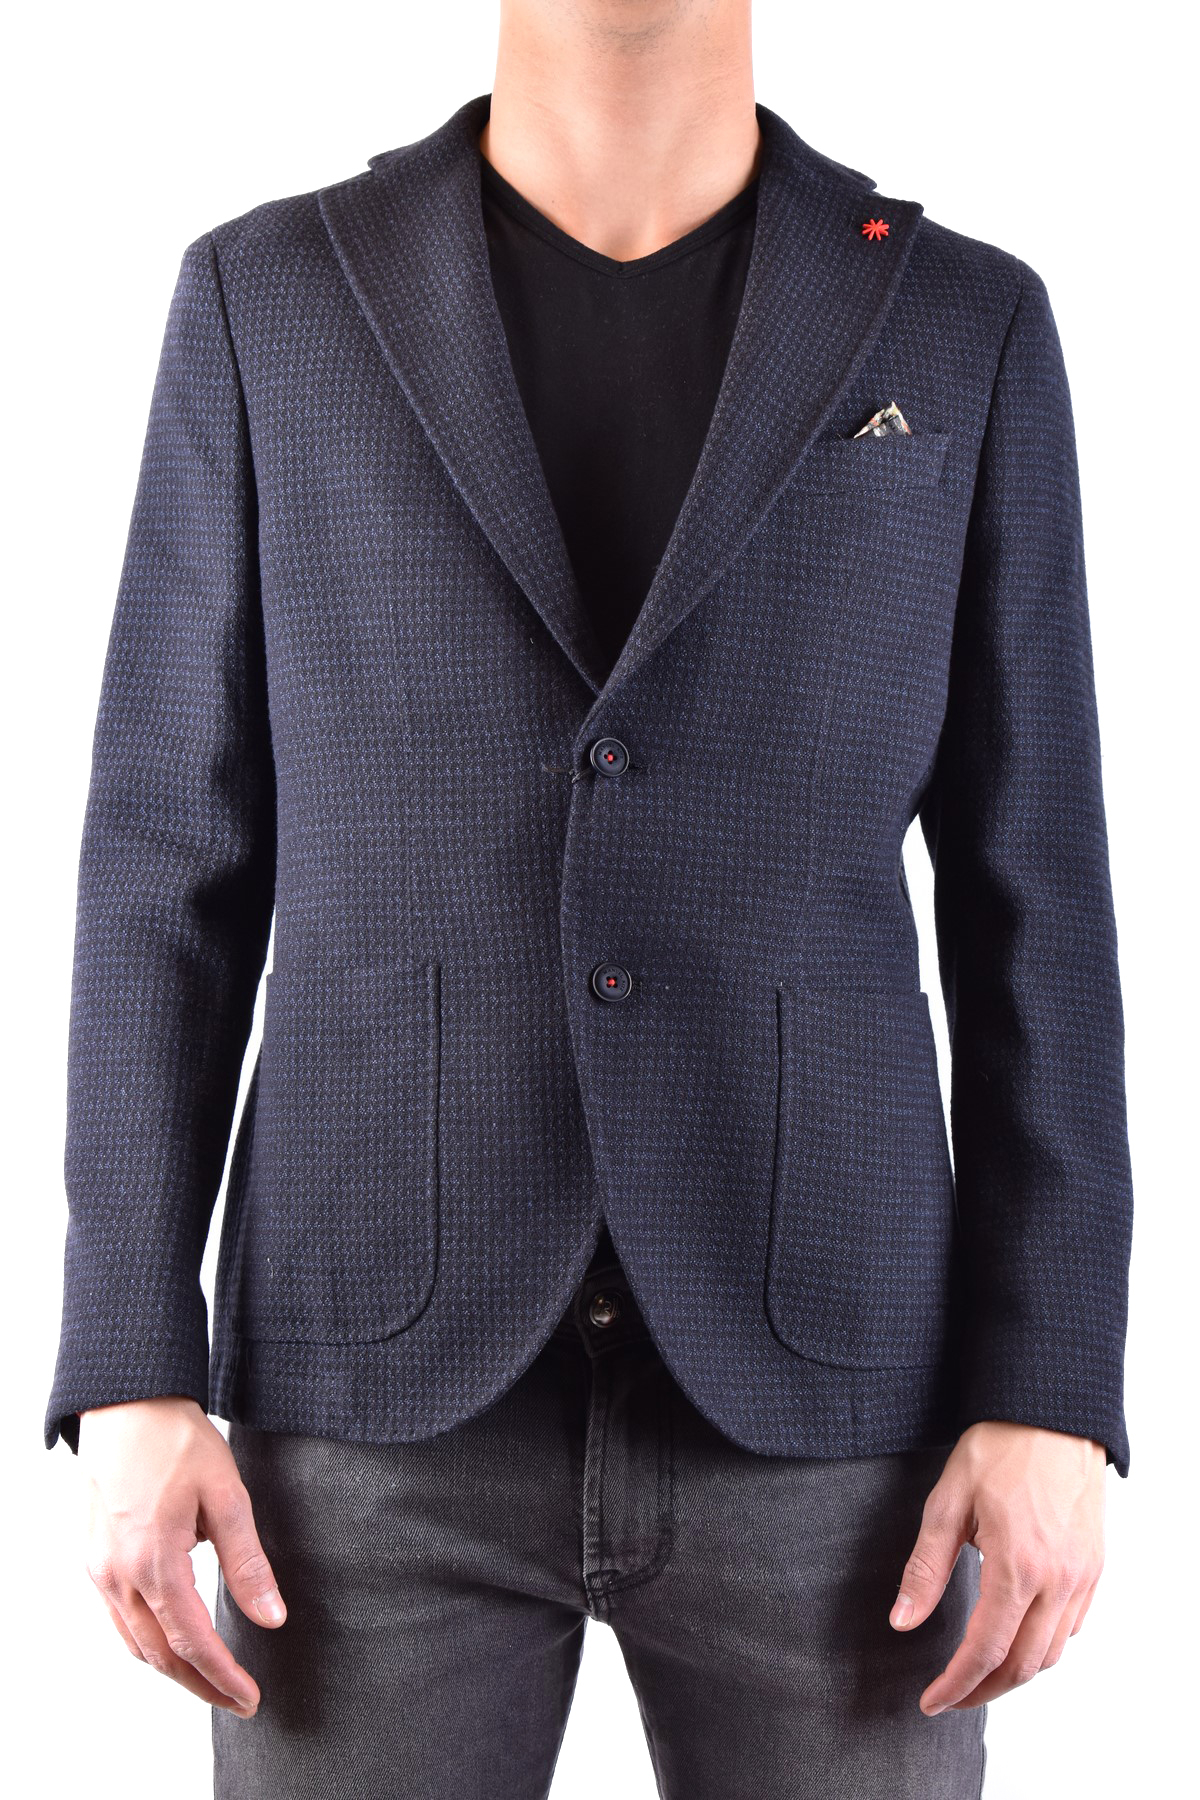 Manuel Ritz Jacket | eBay